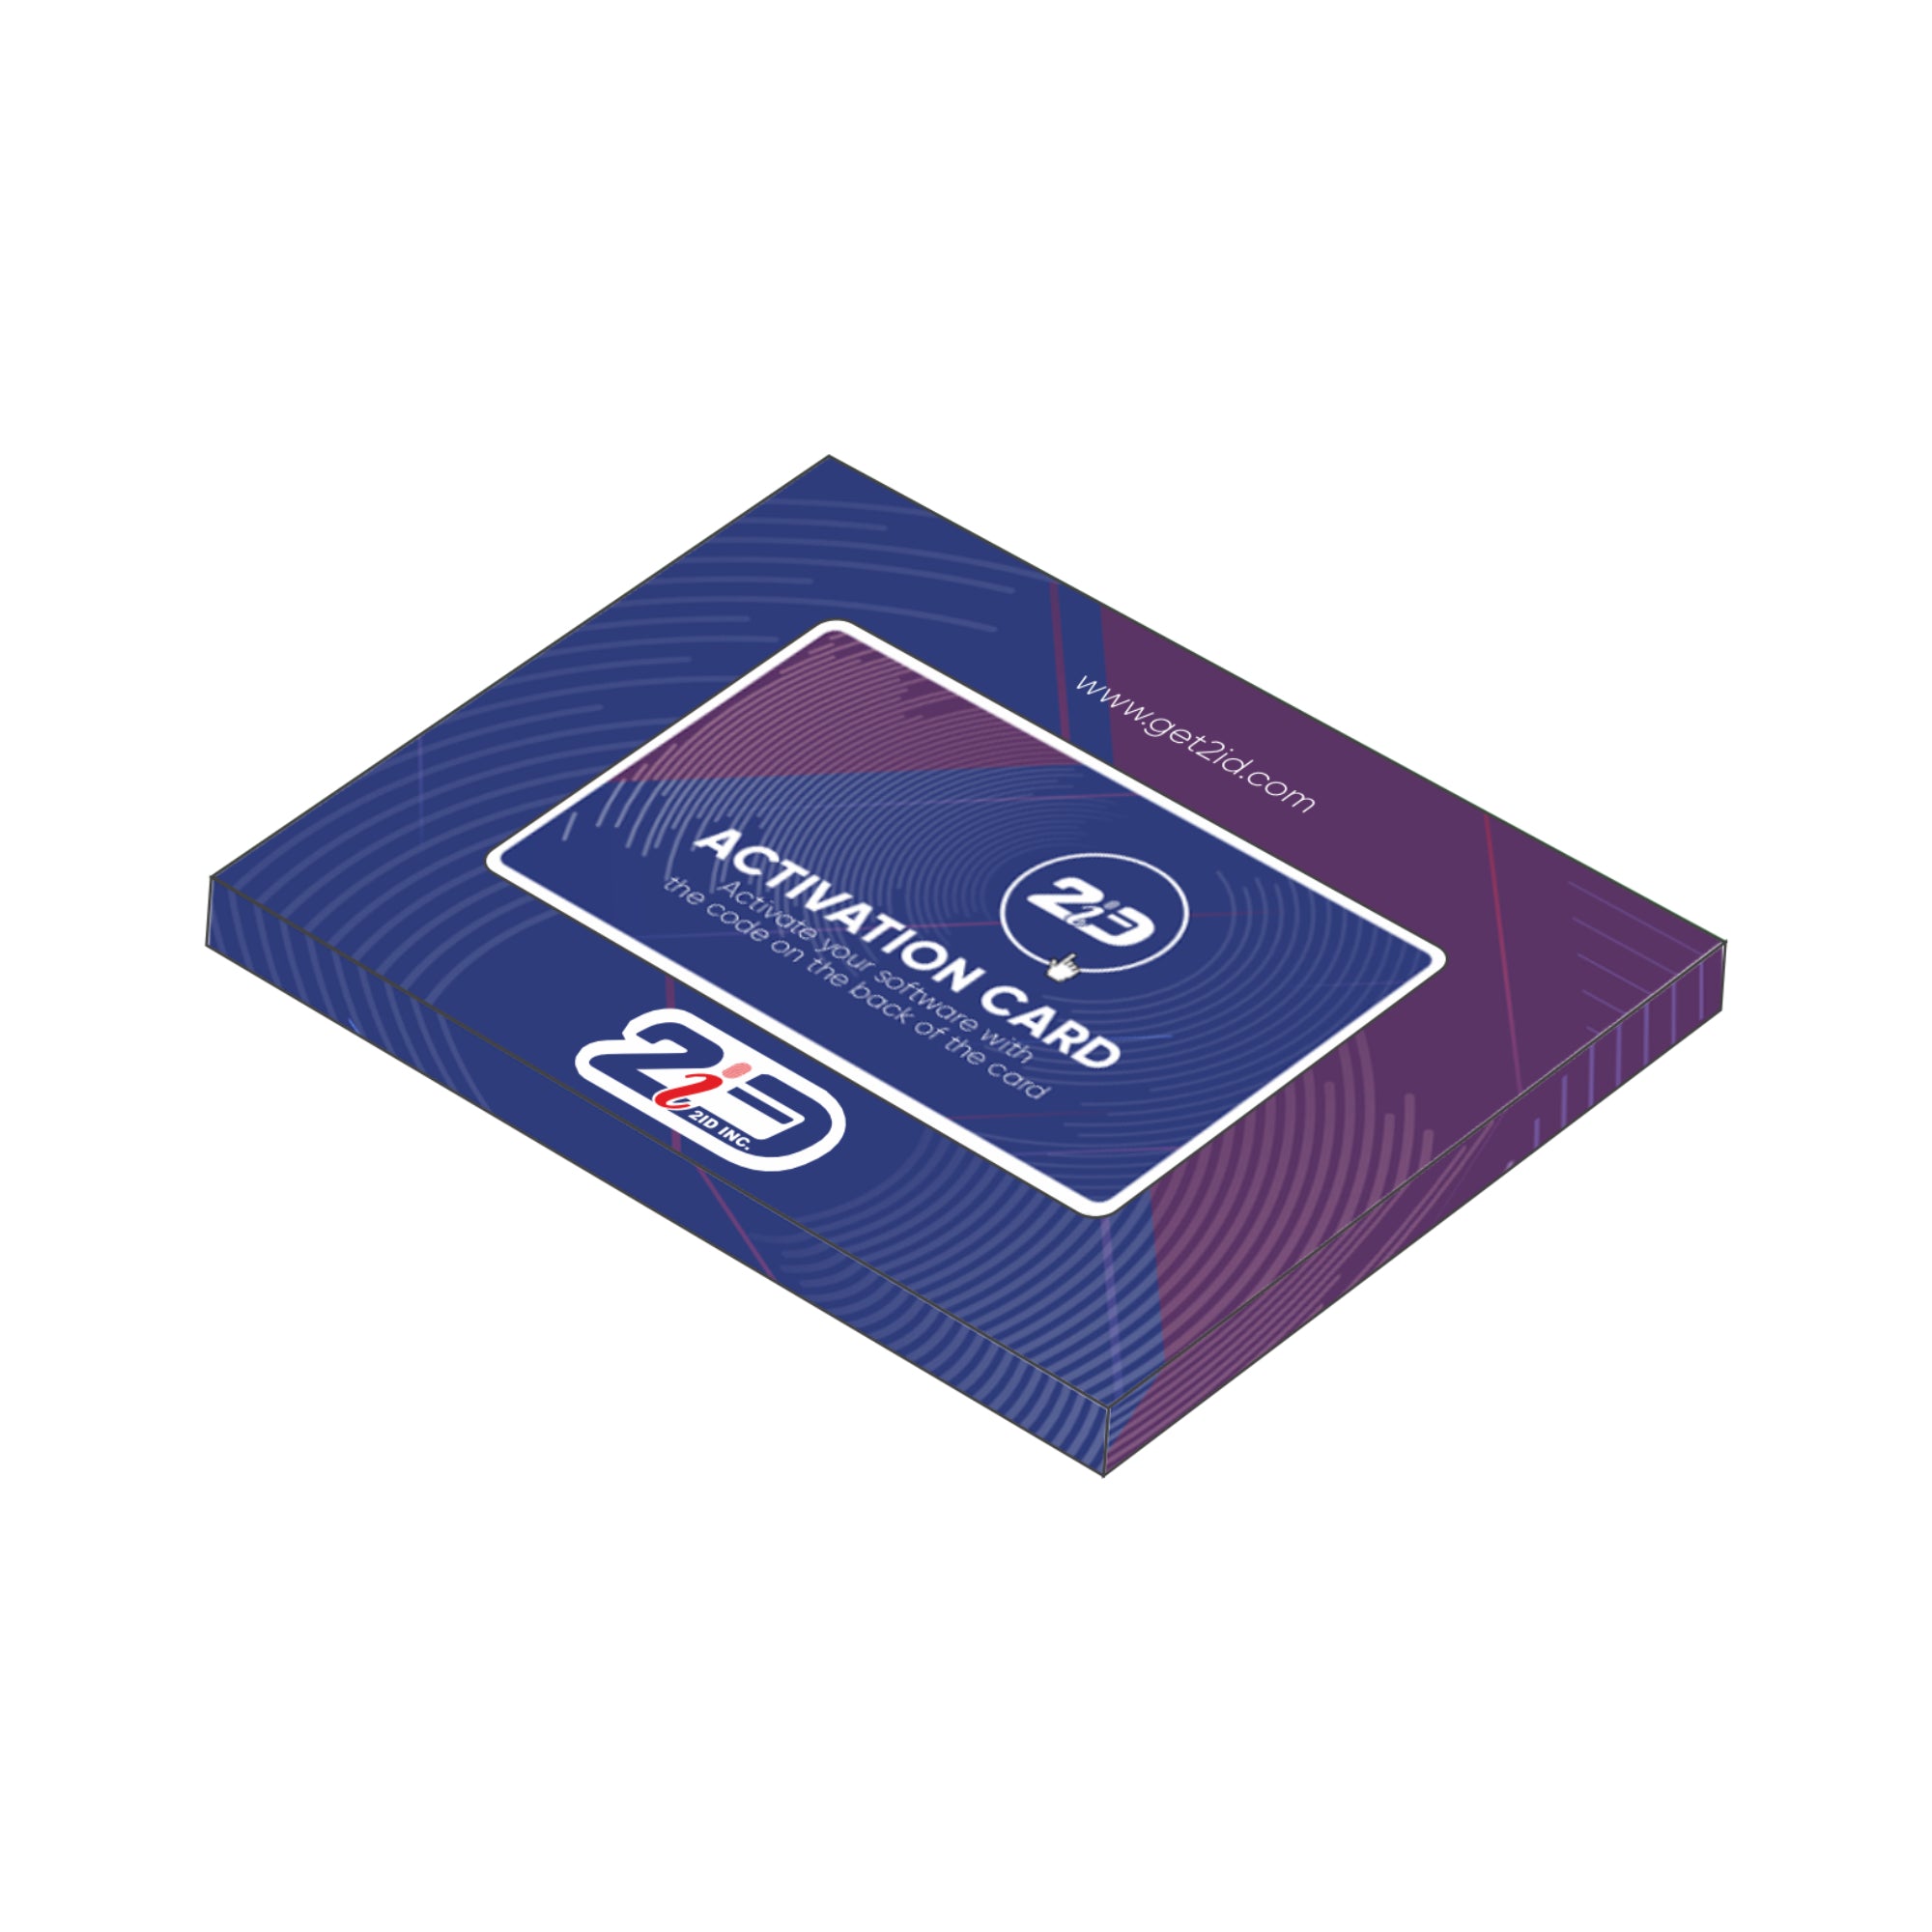 2ID Card Software - Beginner Edition